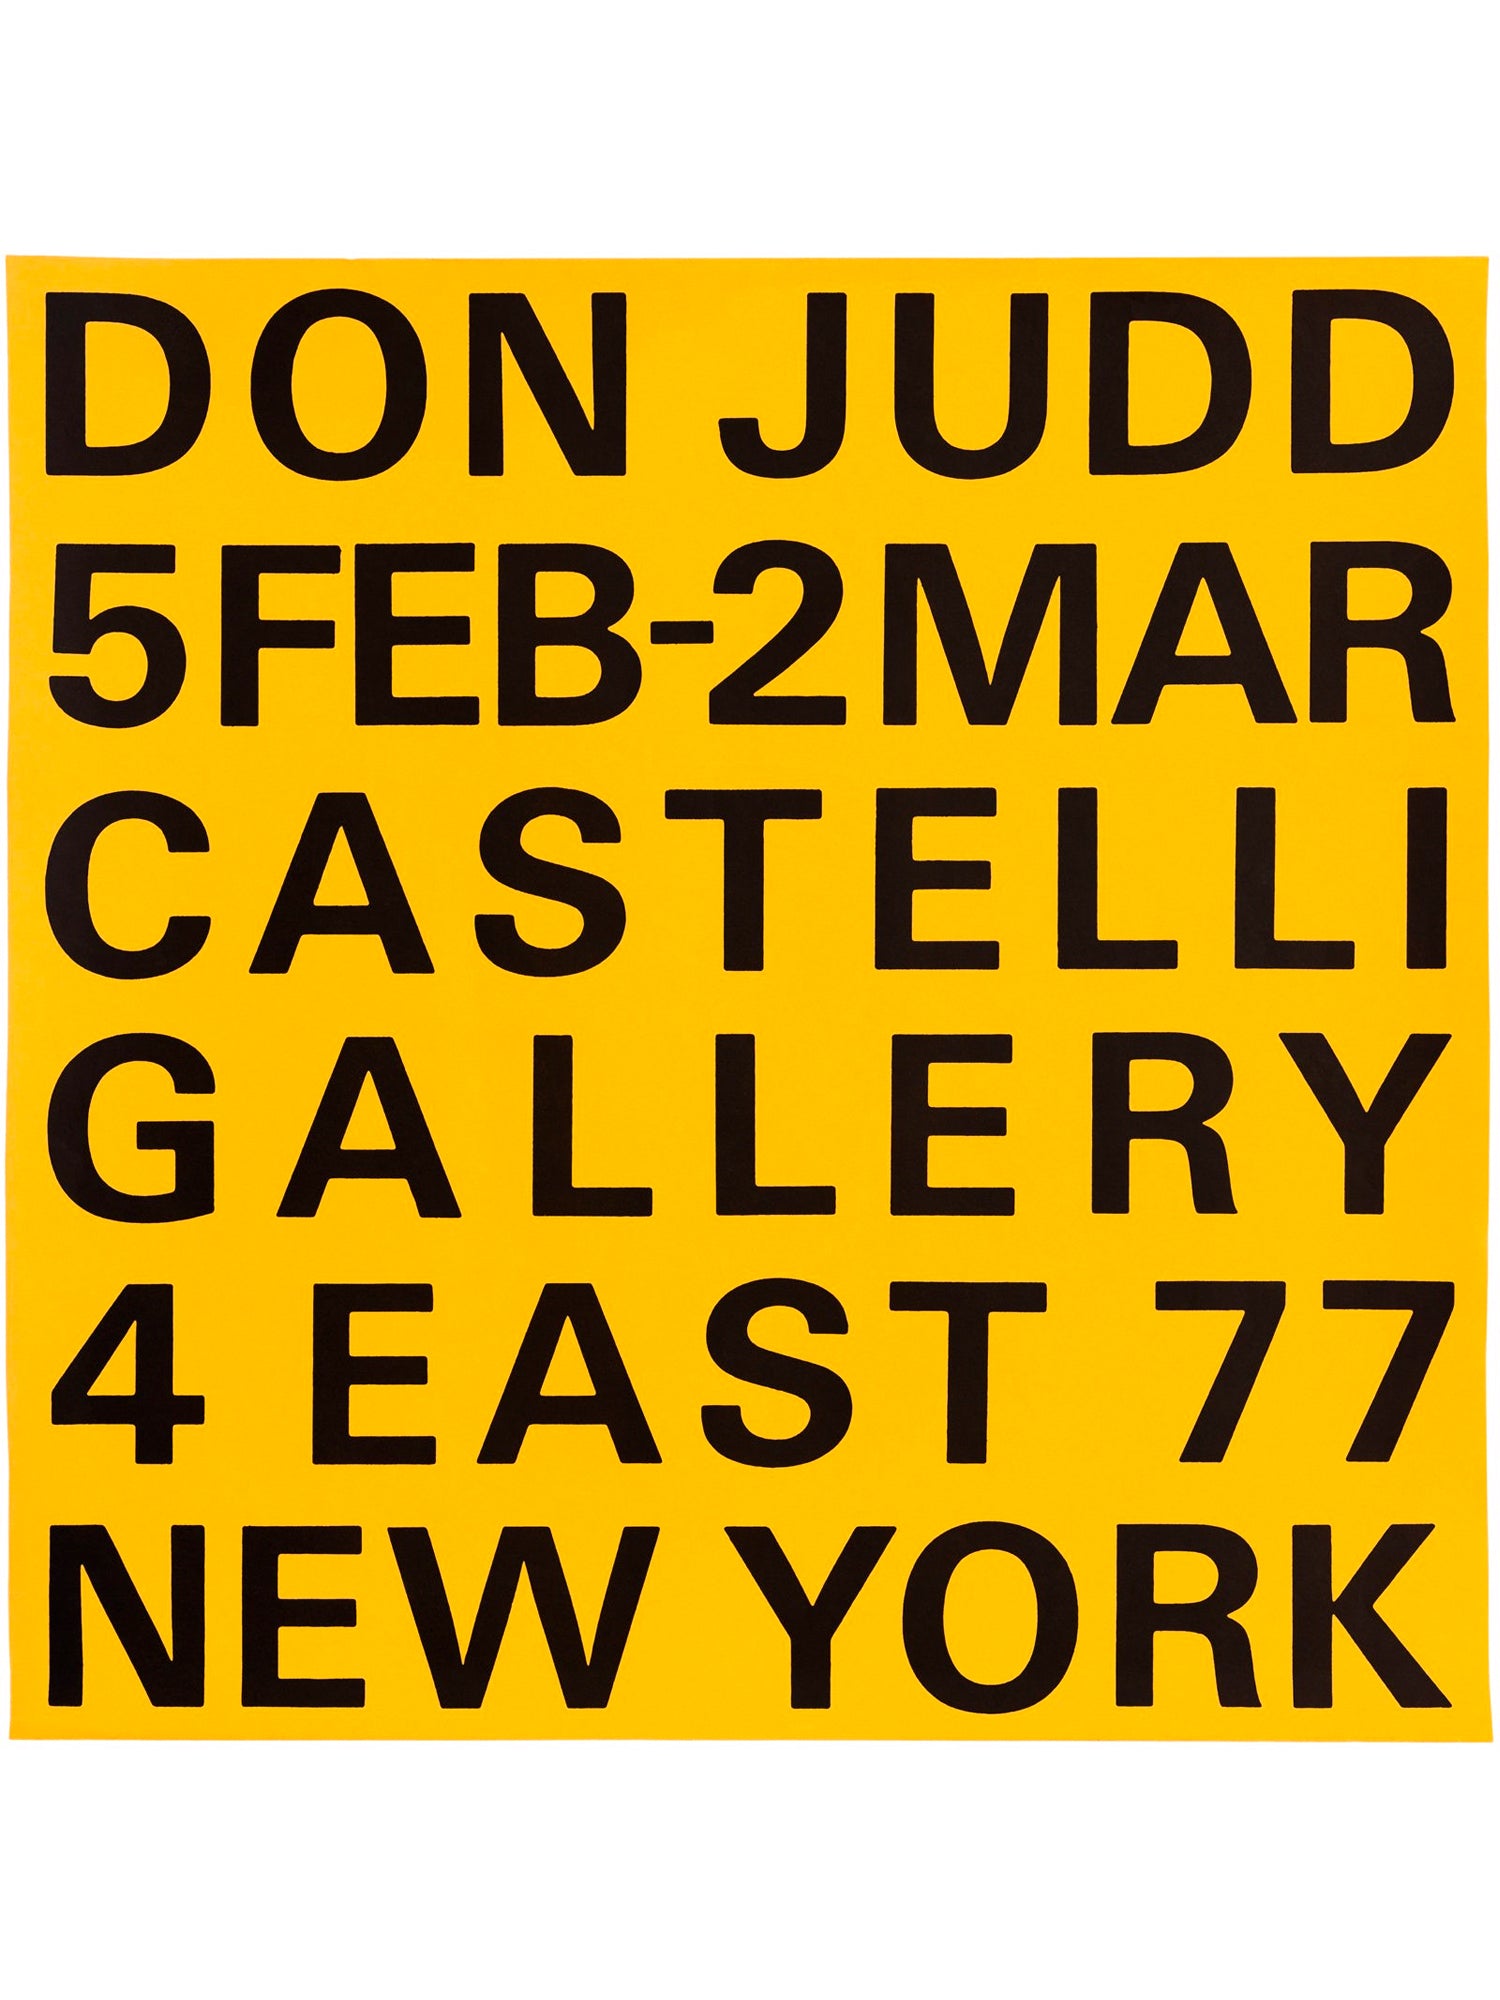 Donald Judd - Leo Castelli Gallery – 1966 Exhibition Poster